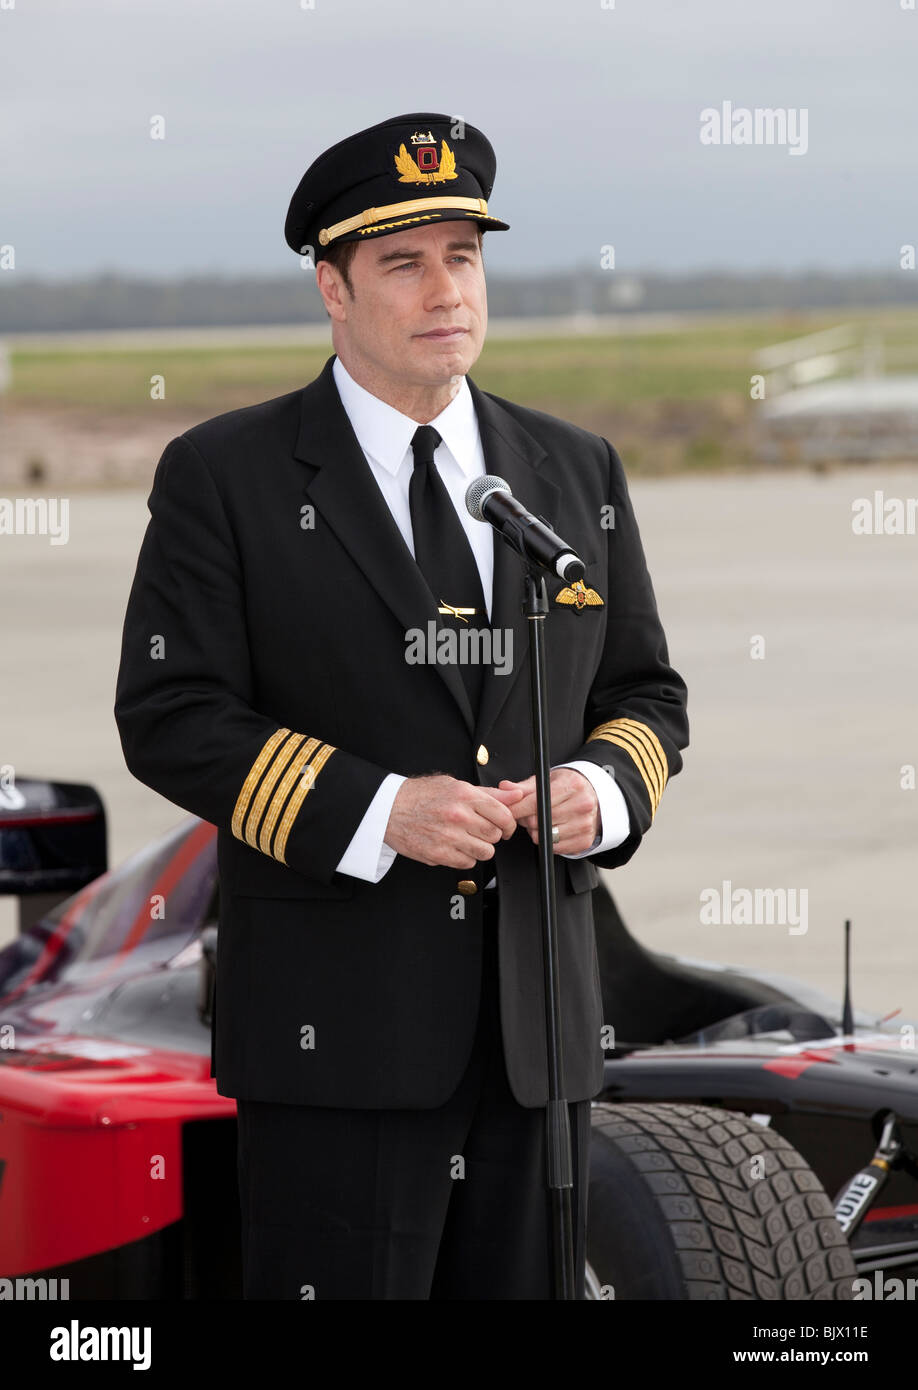 John Travolta portant l'uniforme de pilote de Qantas, aéroport de Melbourne, 2010. Banque D'Images